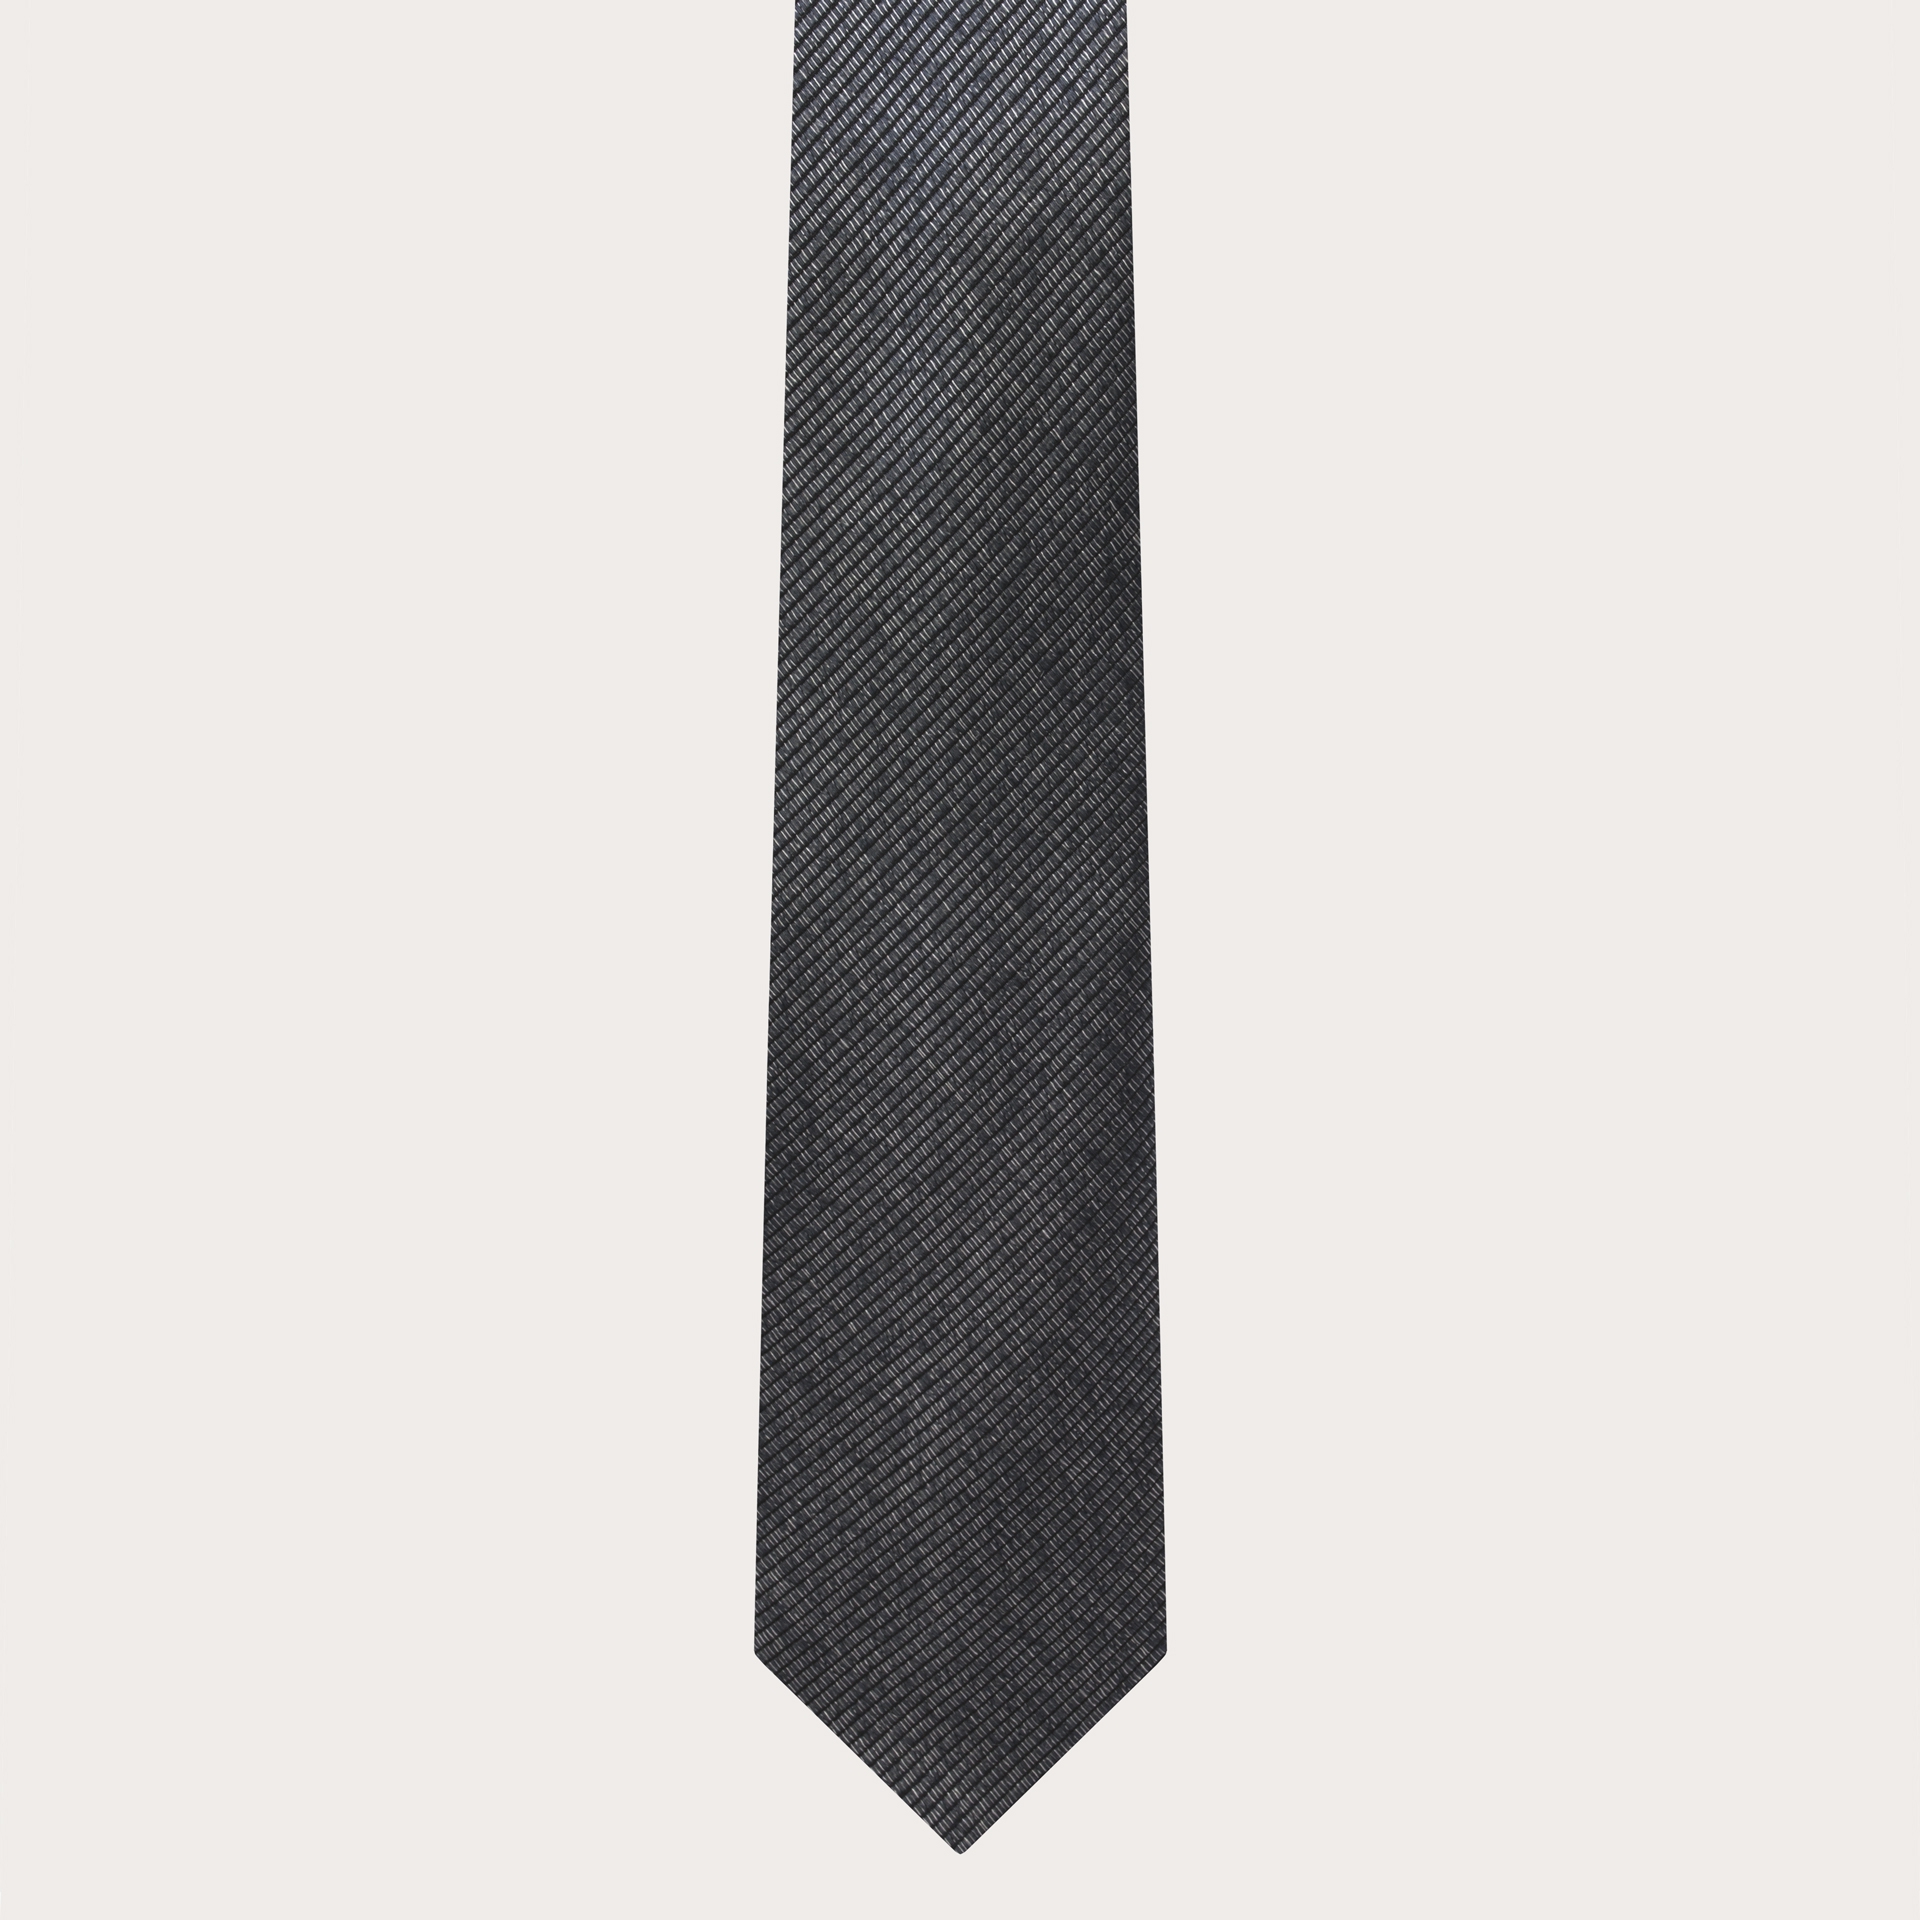 Corbata negra con estampado en cachemir plata